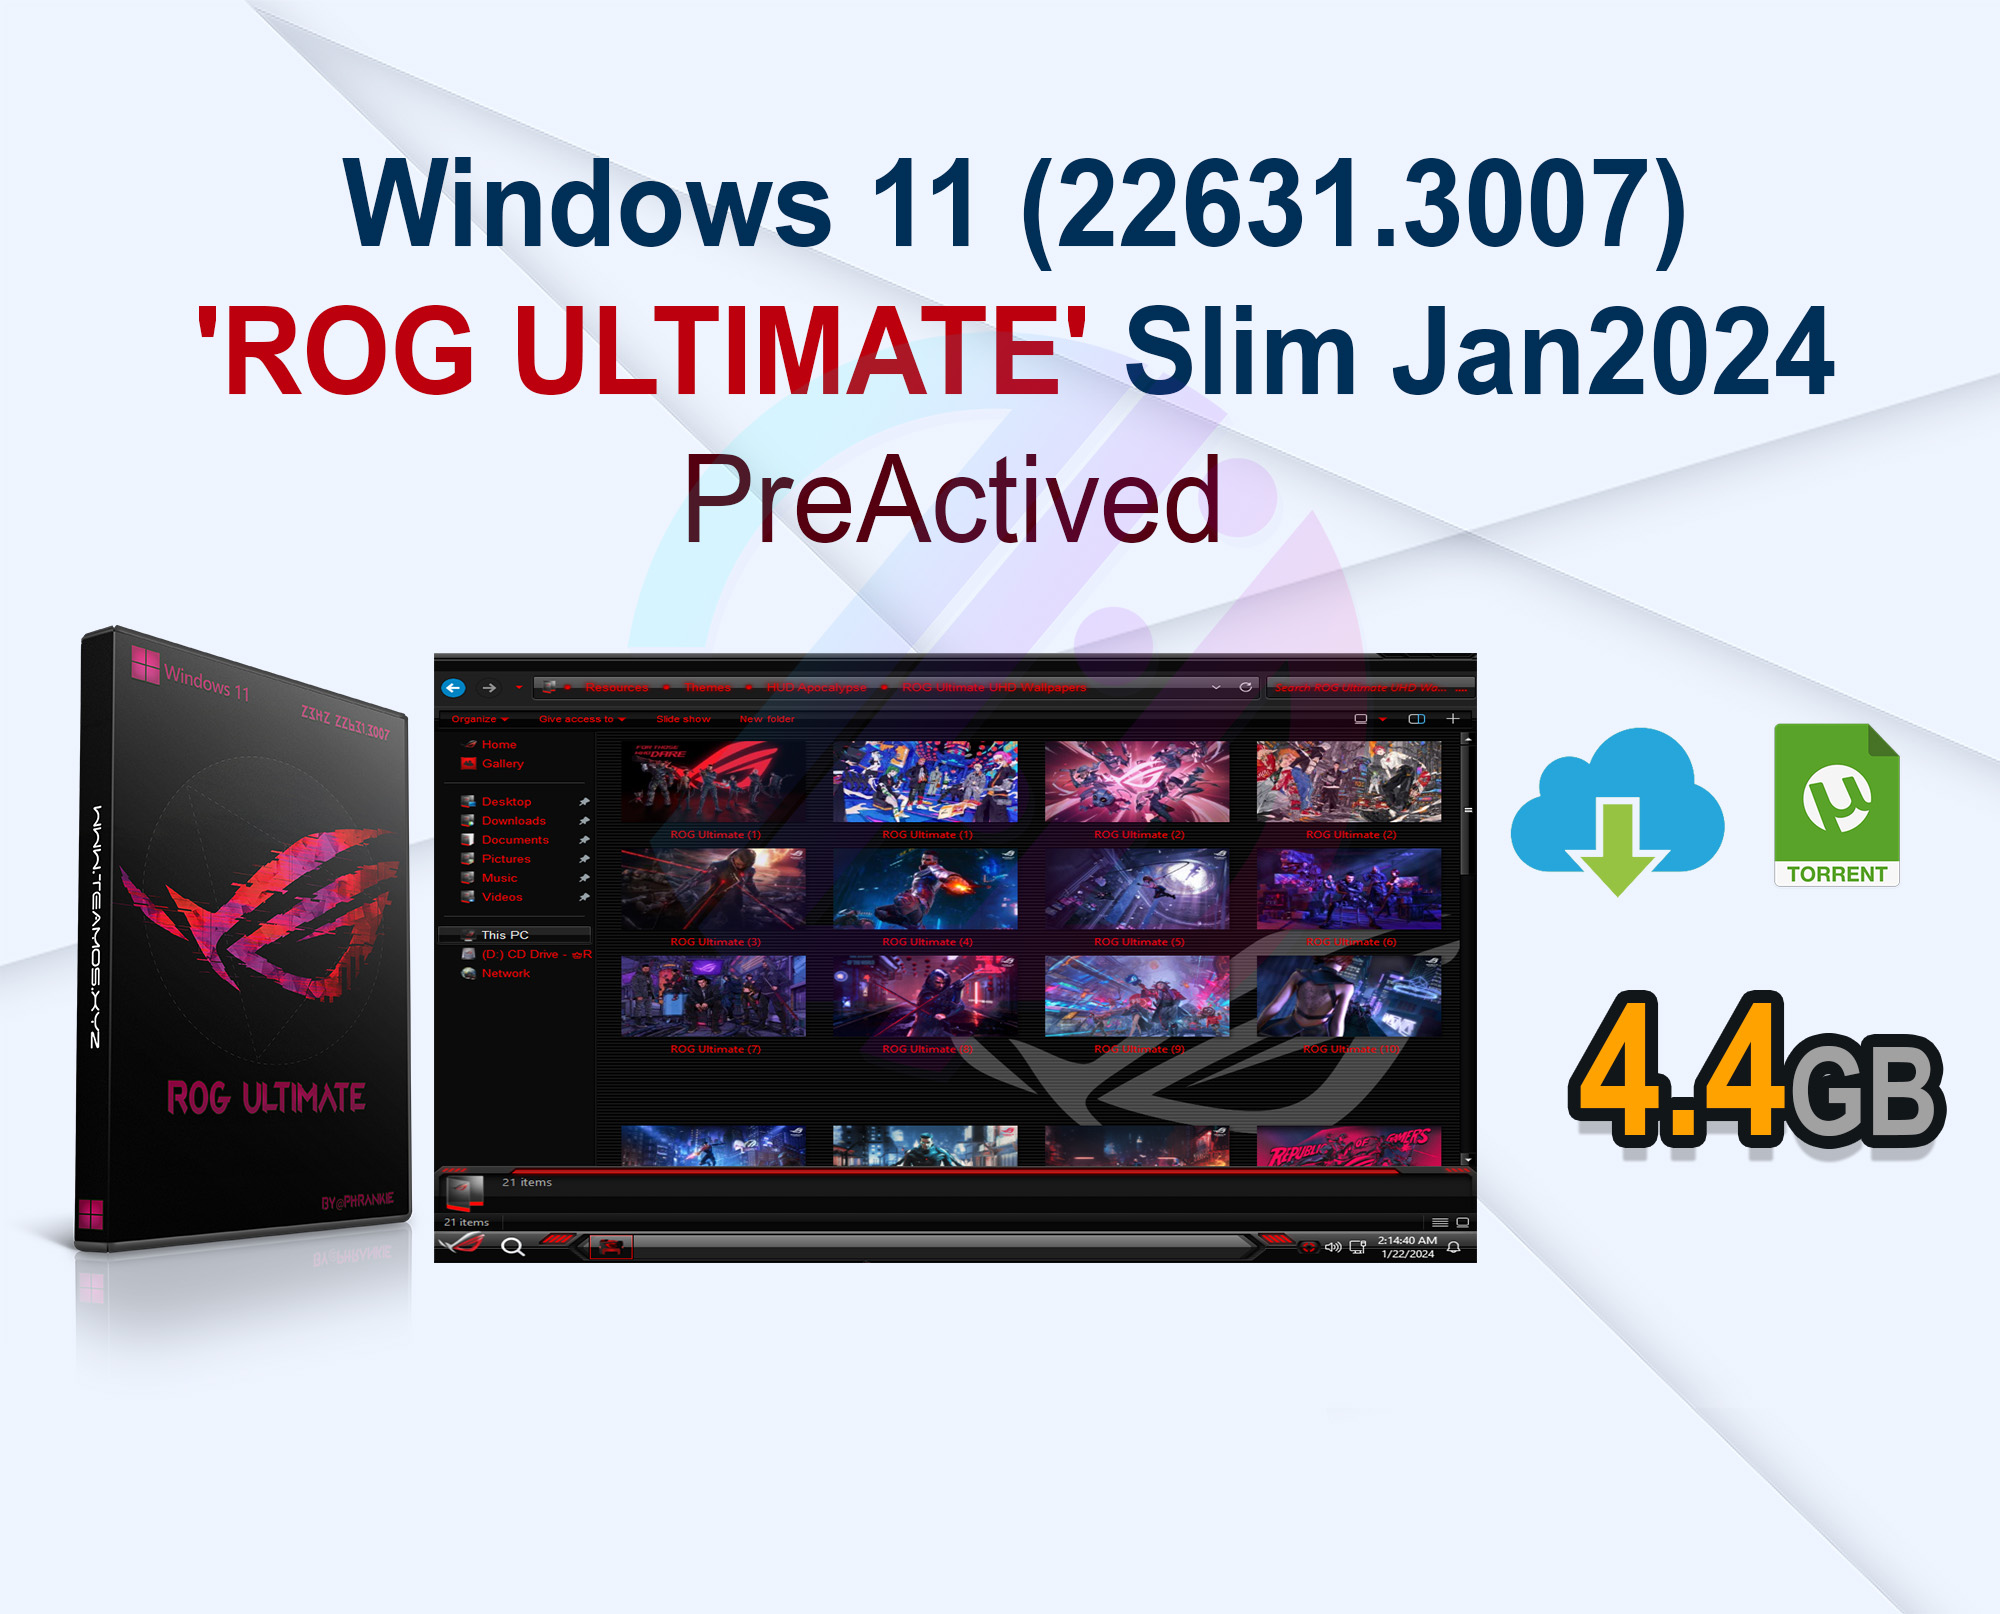 Windows 11 (22631.3007) ‘ROG ULTIMATE’ Slim Jan2024 Pre-Activated